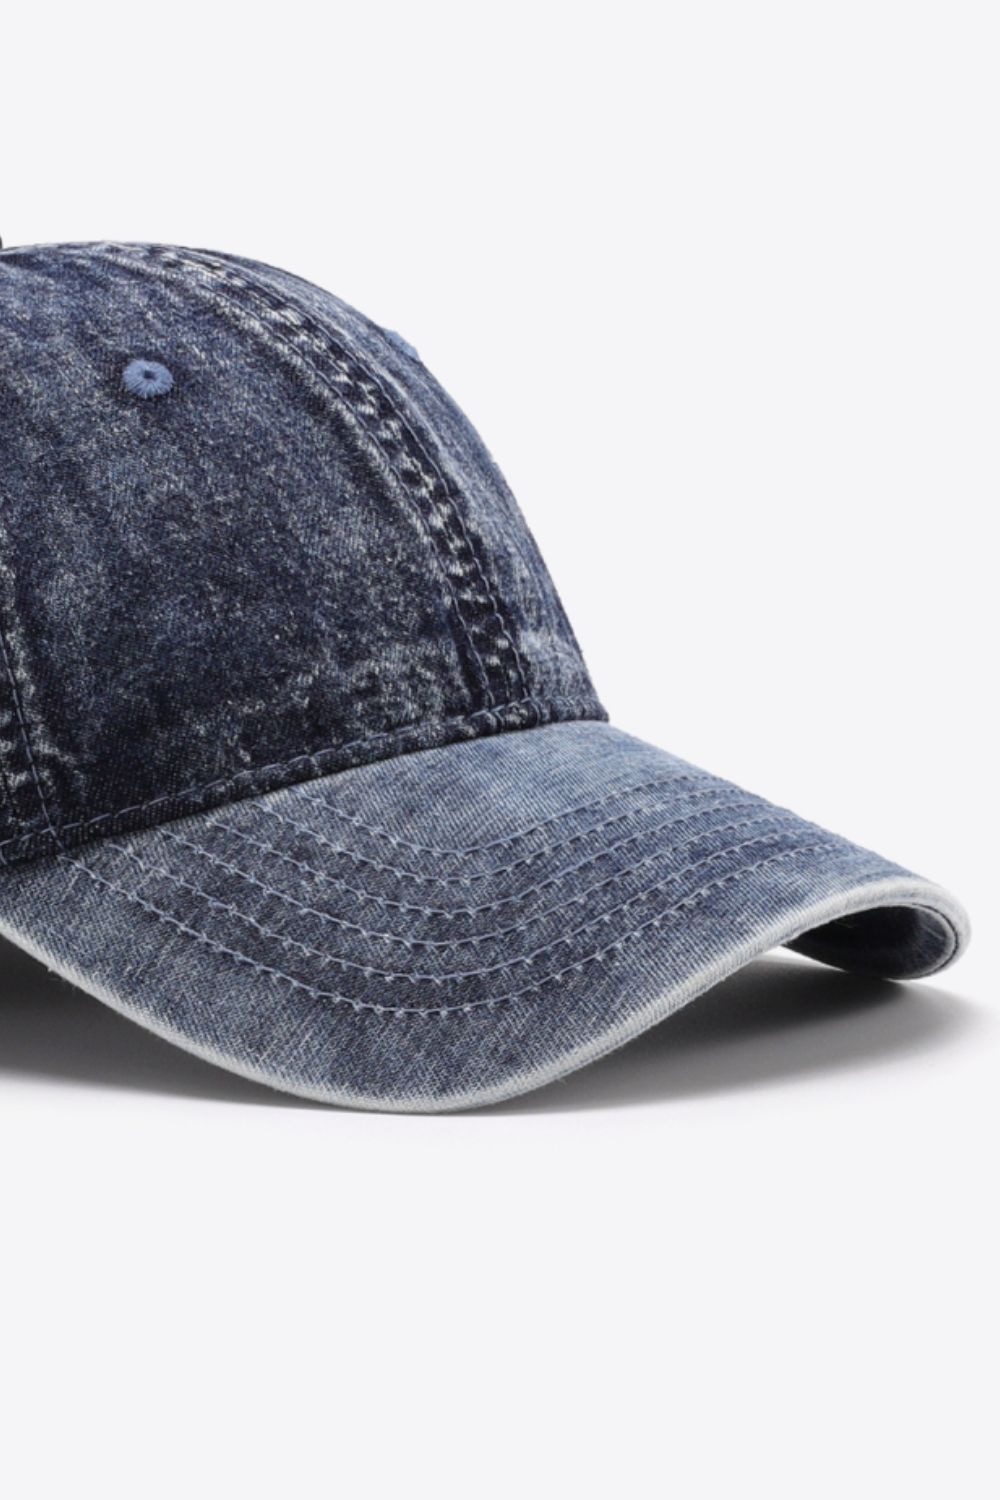 Plain Adjustable Baseball Cap Print on any thing USA/STOD clothes